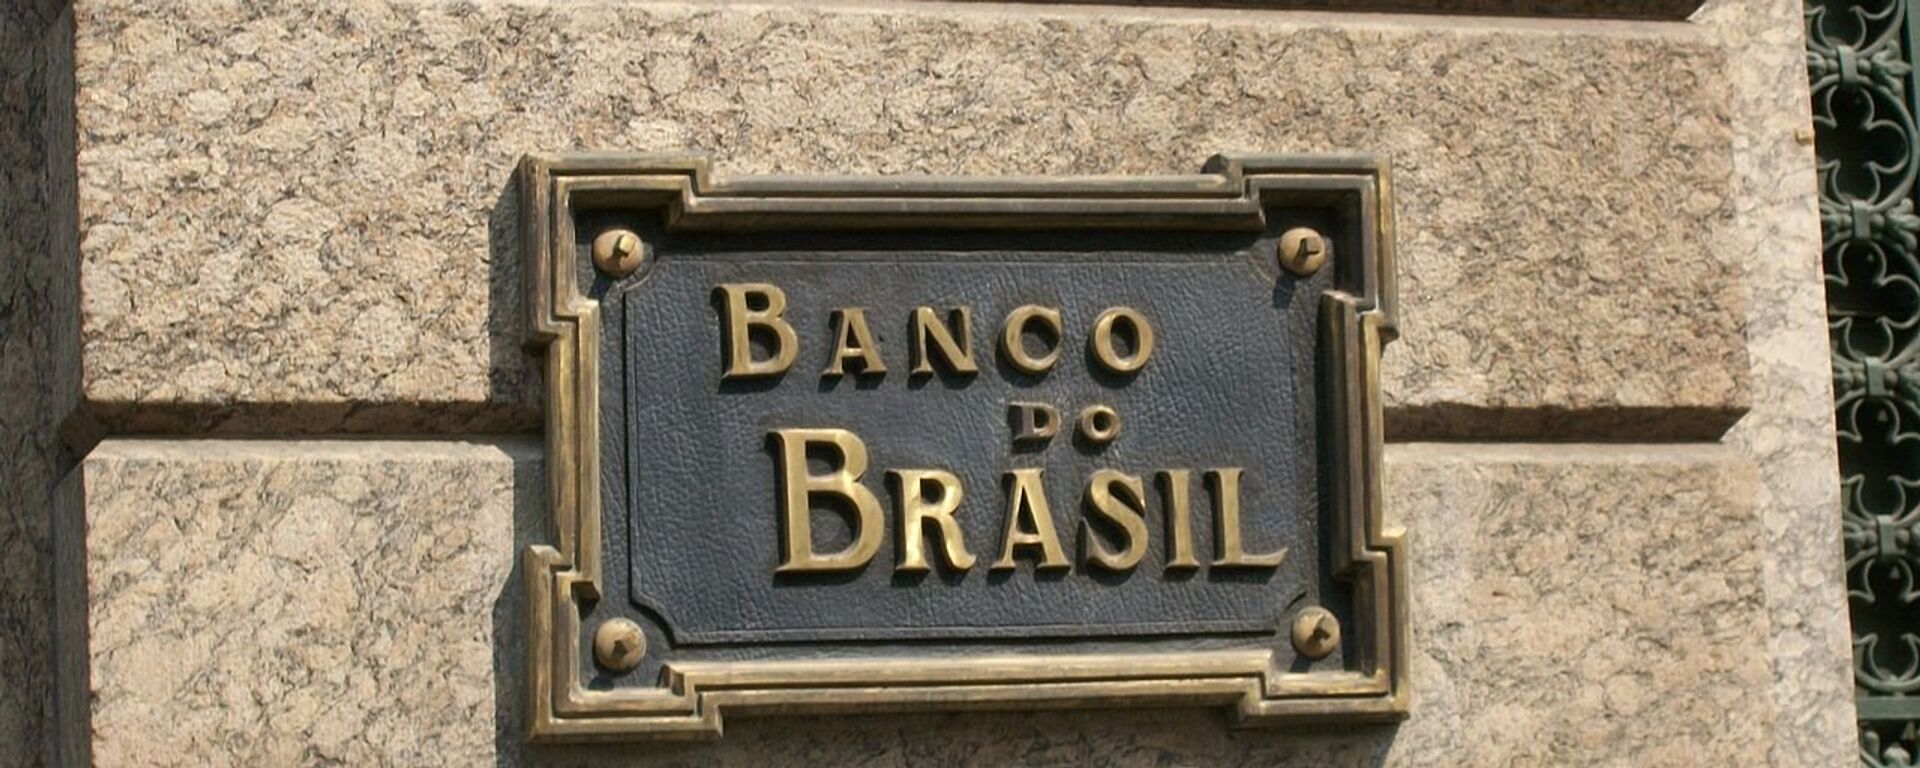 Banco de Brasil - Sputnik Mundo, 1920, 18.03.2021